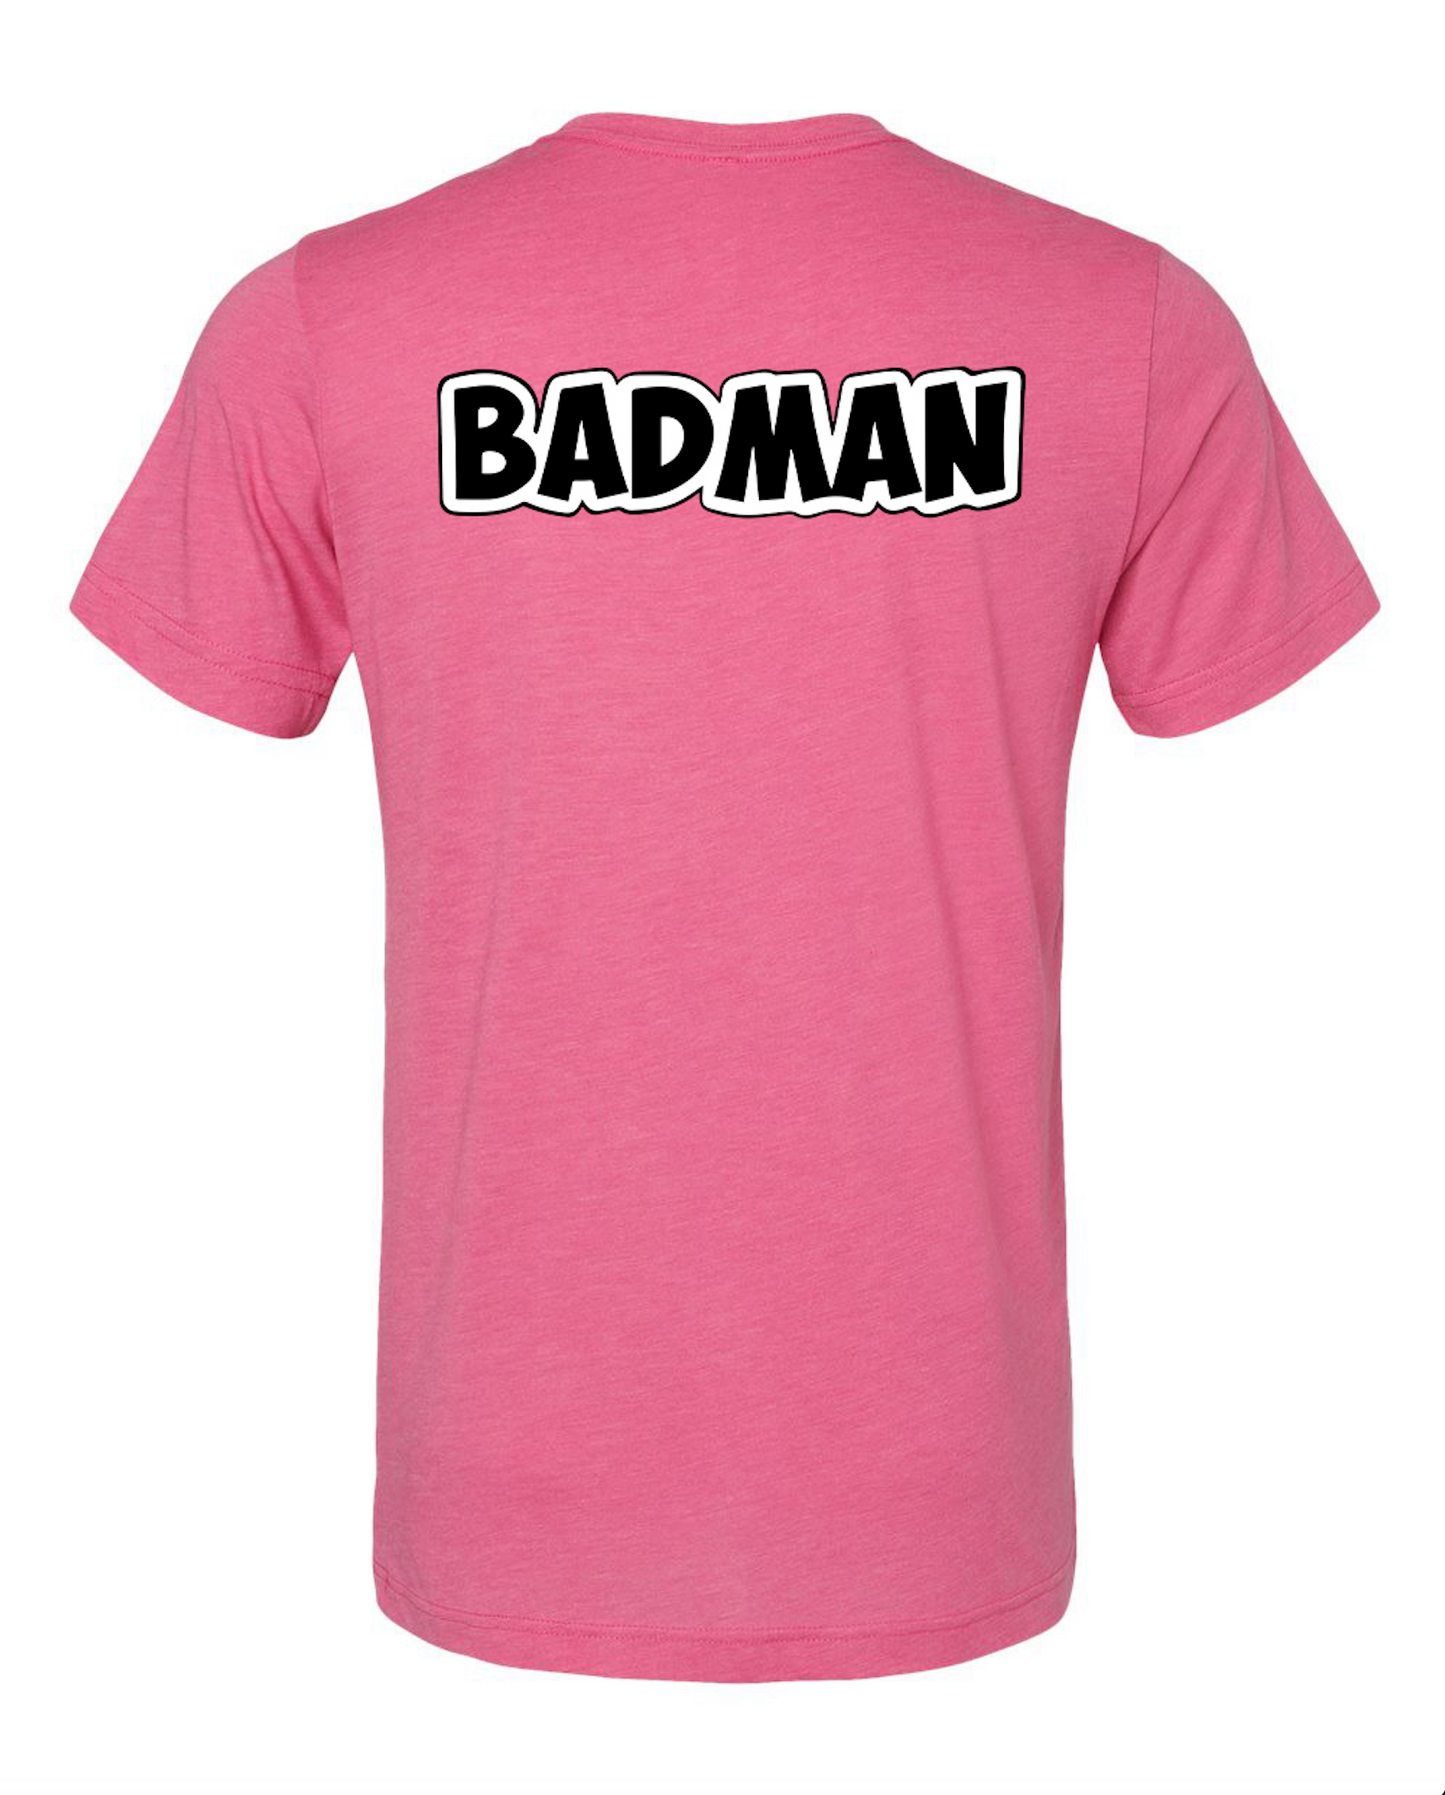 Badman Shirt